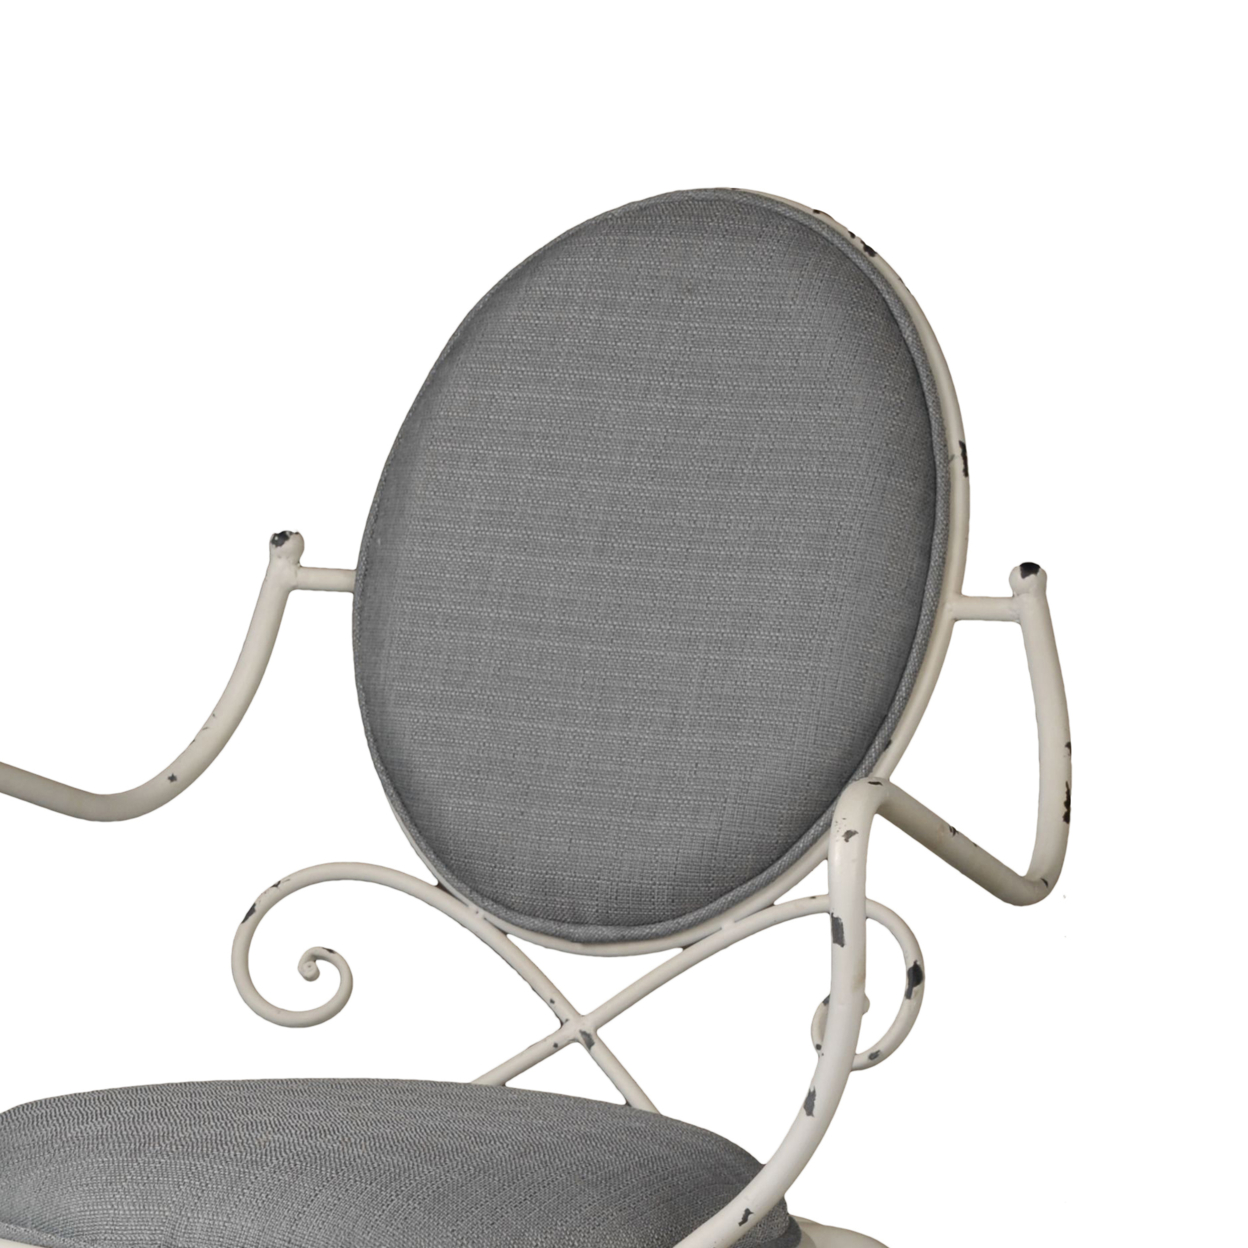 Artistic Geometry Style Chair- Saltoro Sherpi